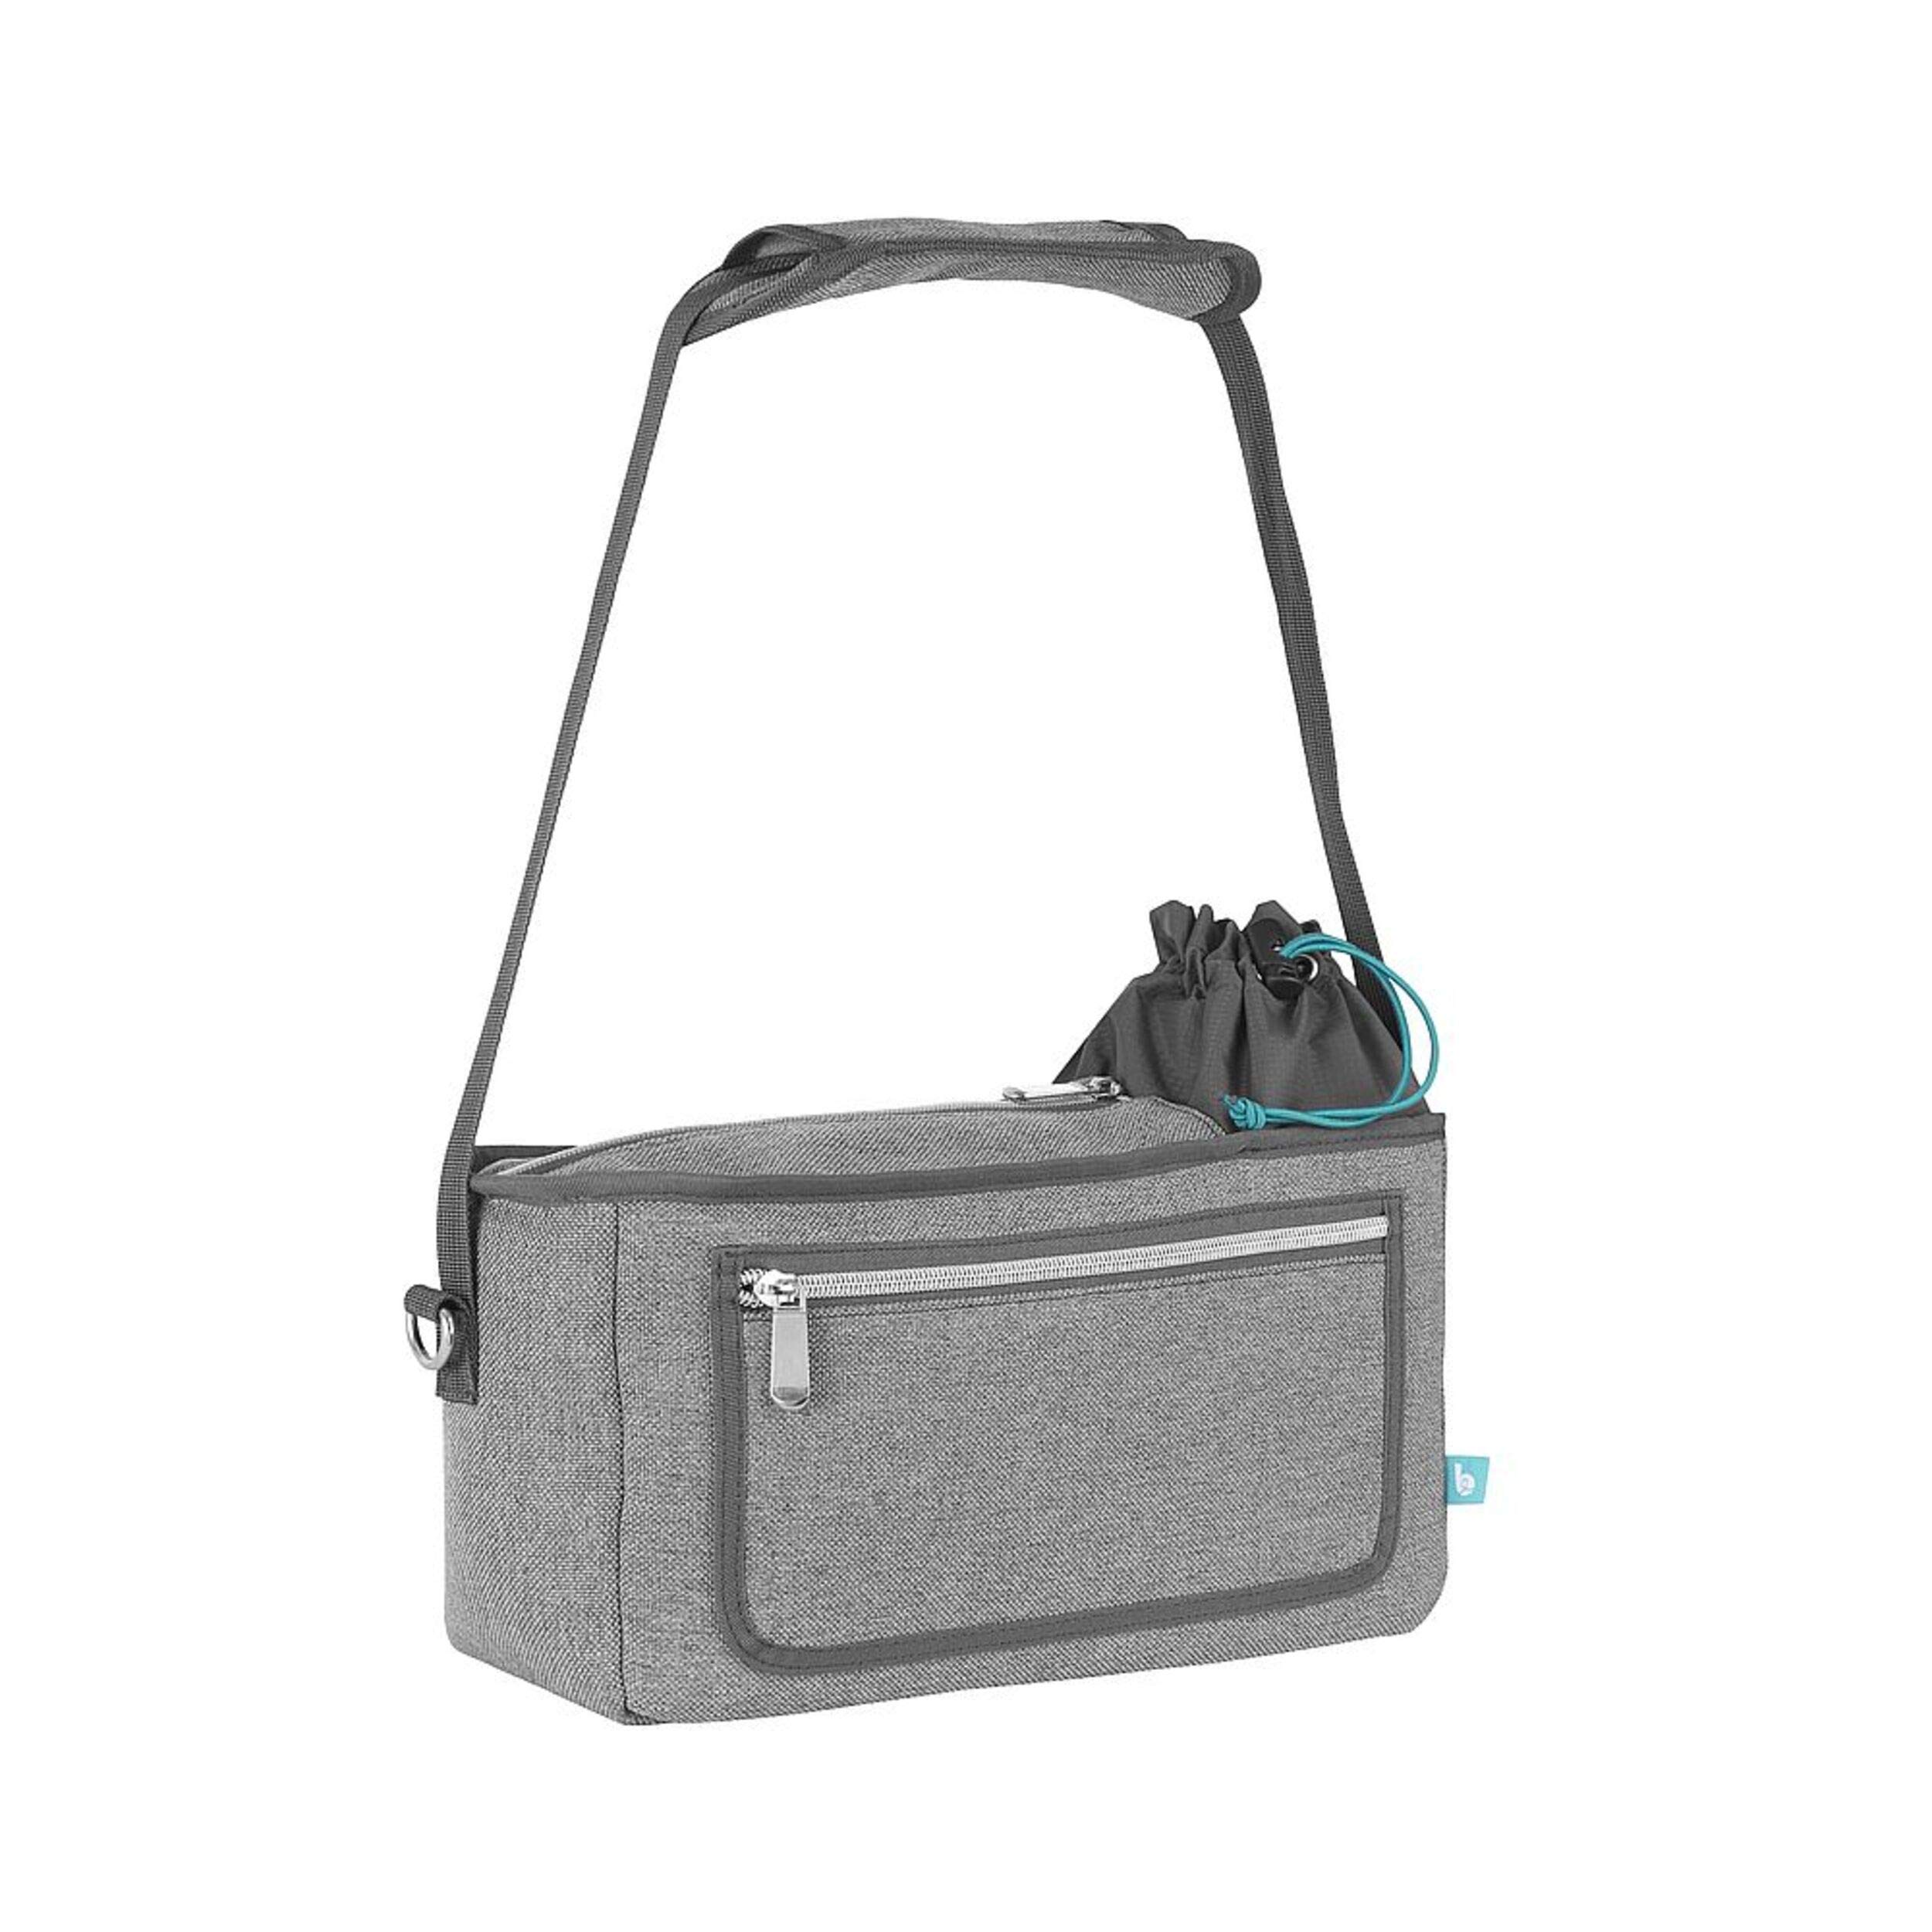 Babymoov Premium Universal Stroller Organizer | XL Storage, Full Zip Closure, Insulated Cup Holder and Smart Phone / iPhone Pouch